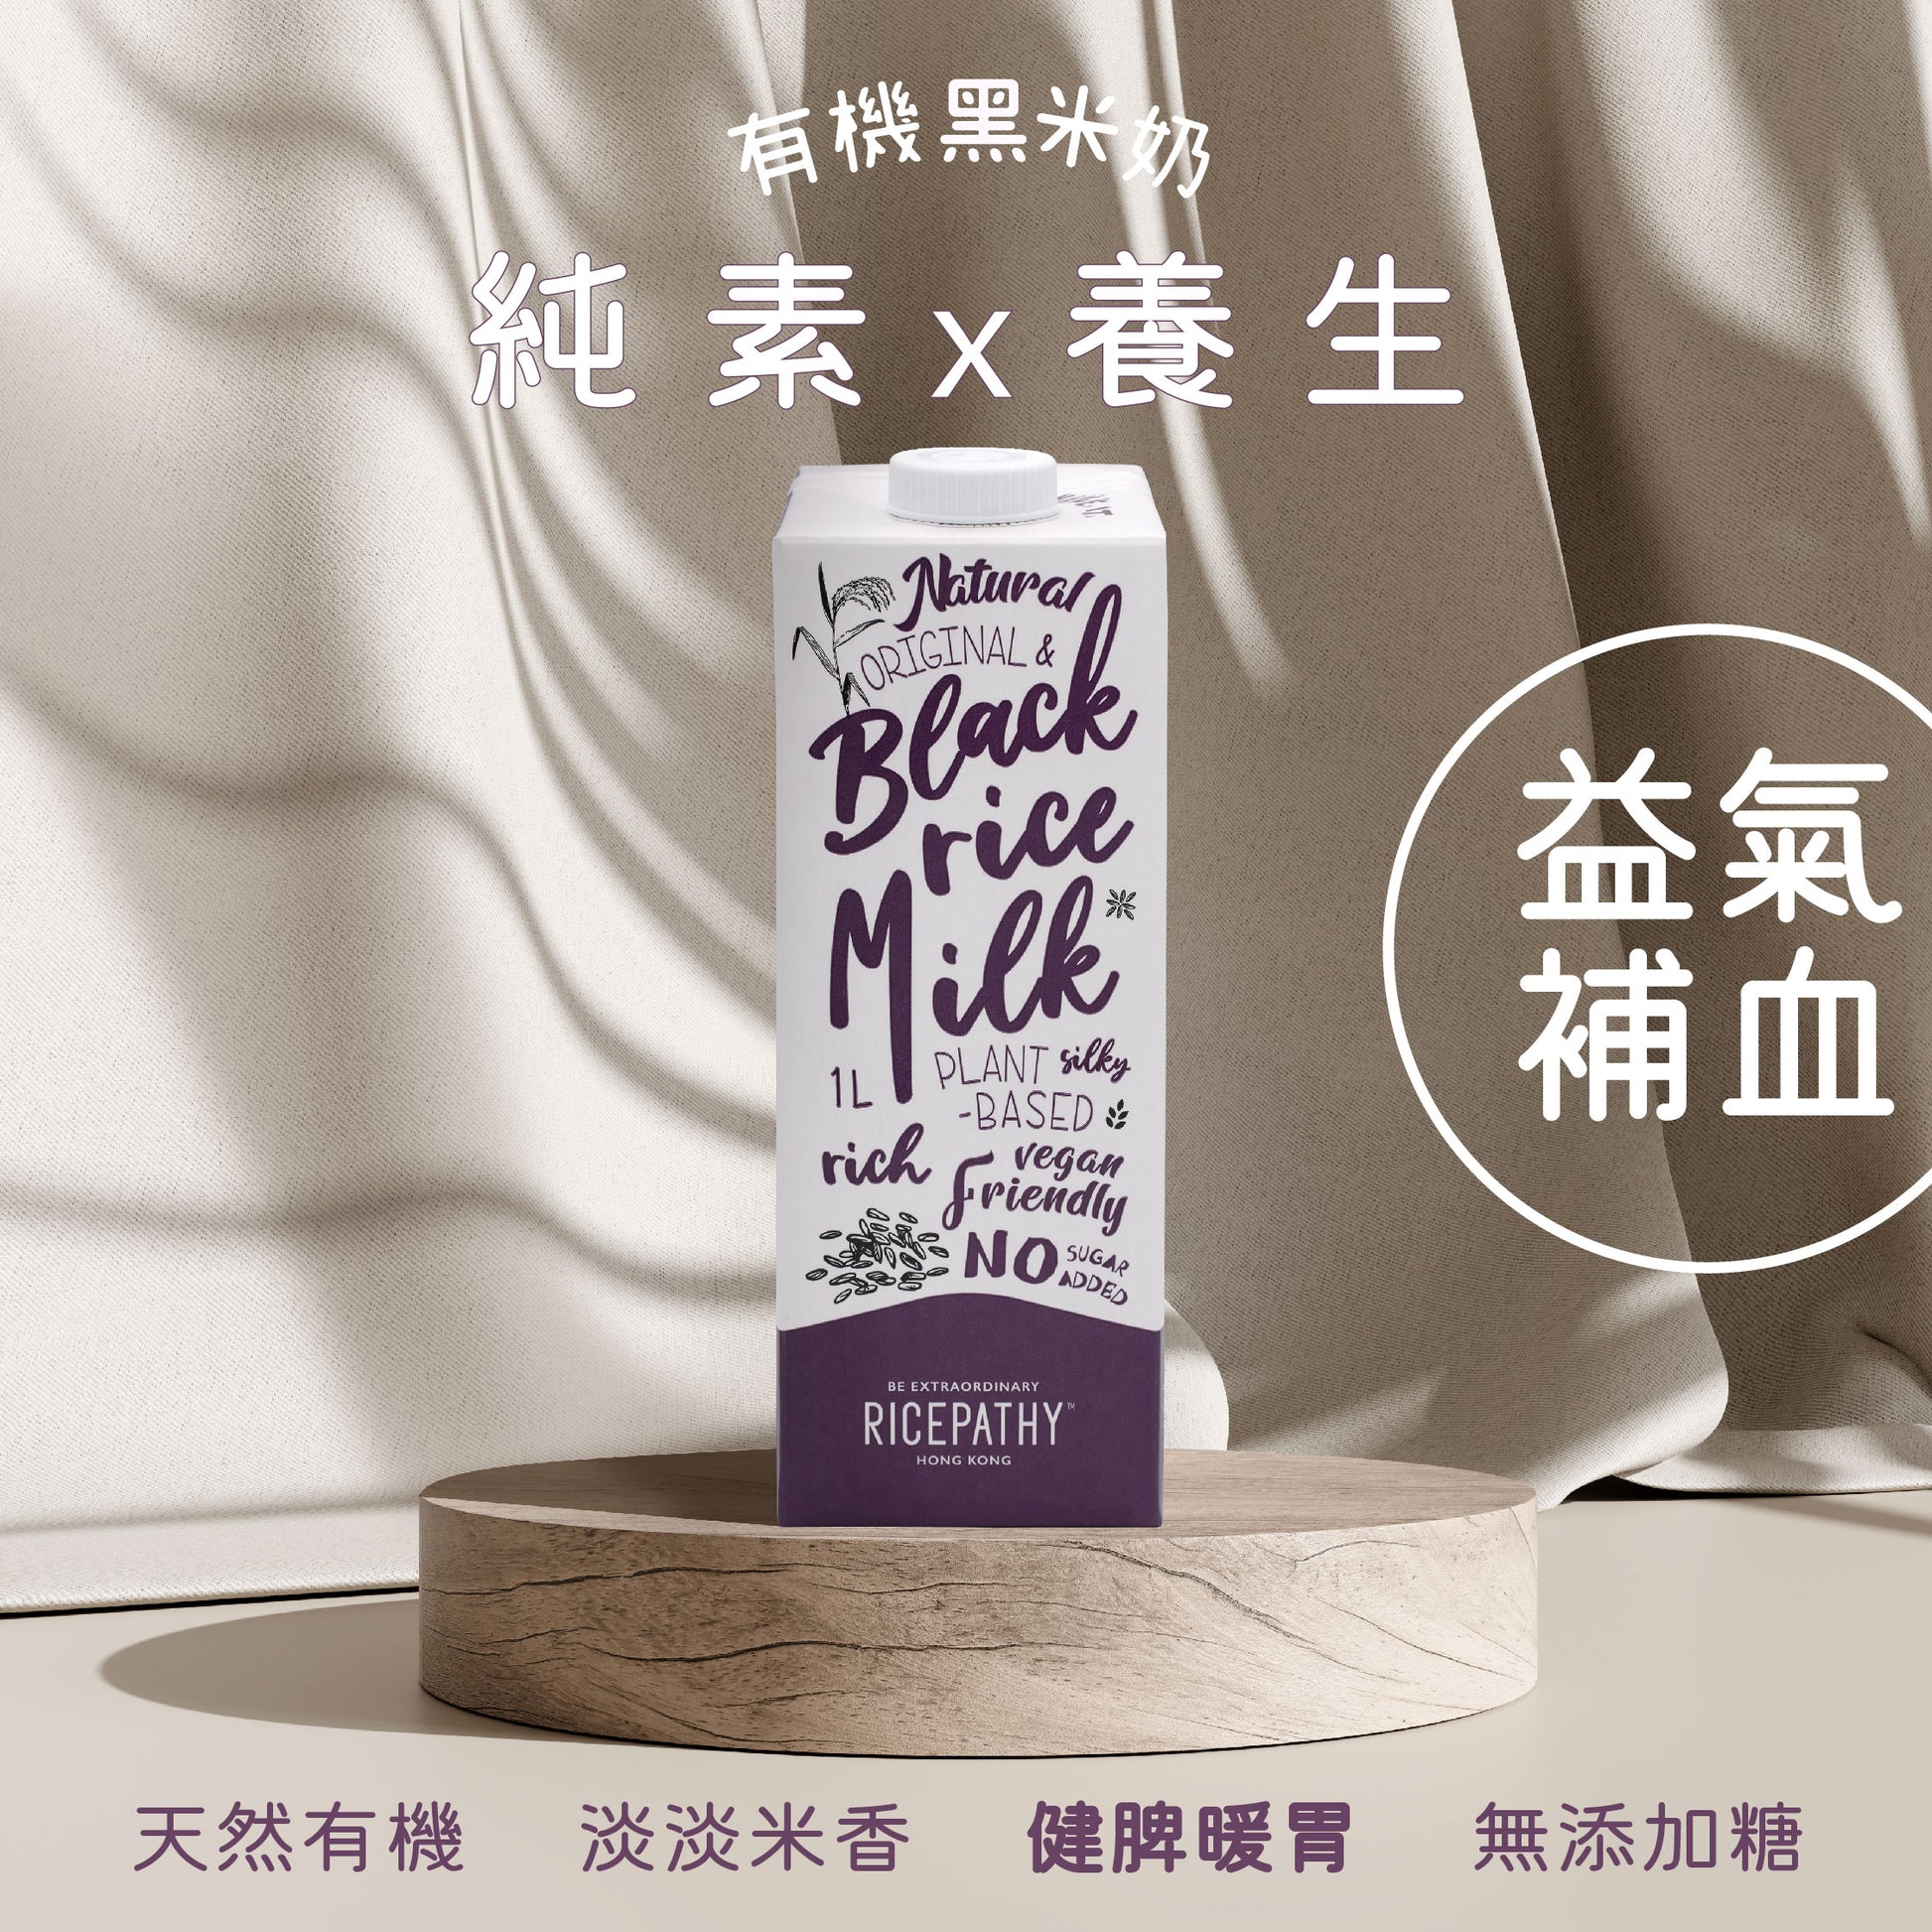 RICEPATHY black rice milk poster